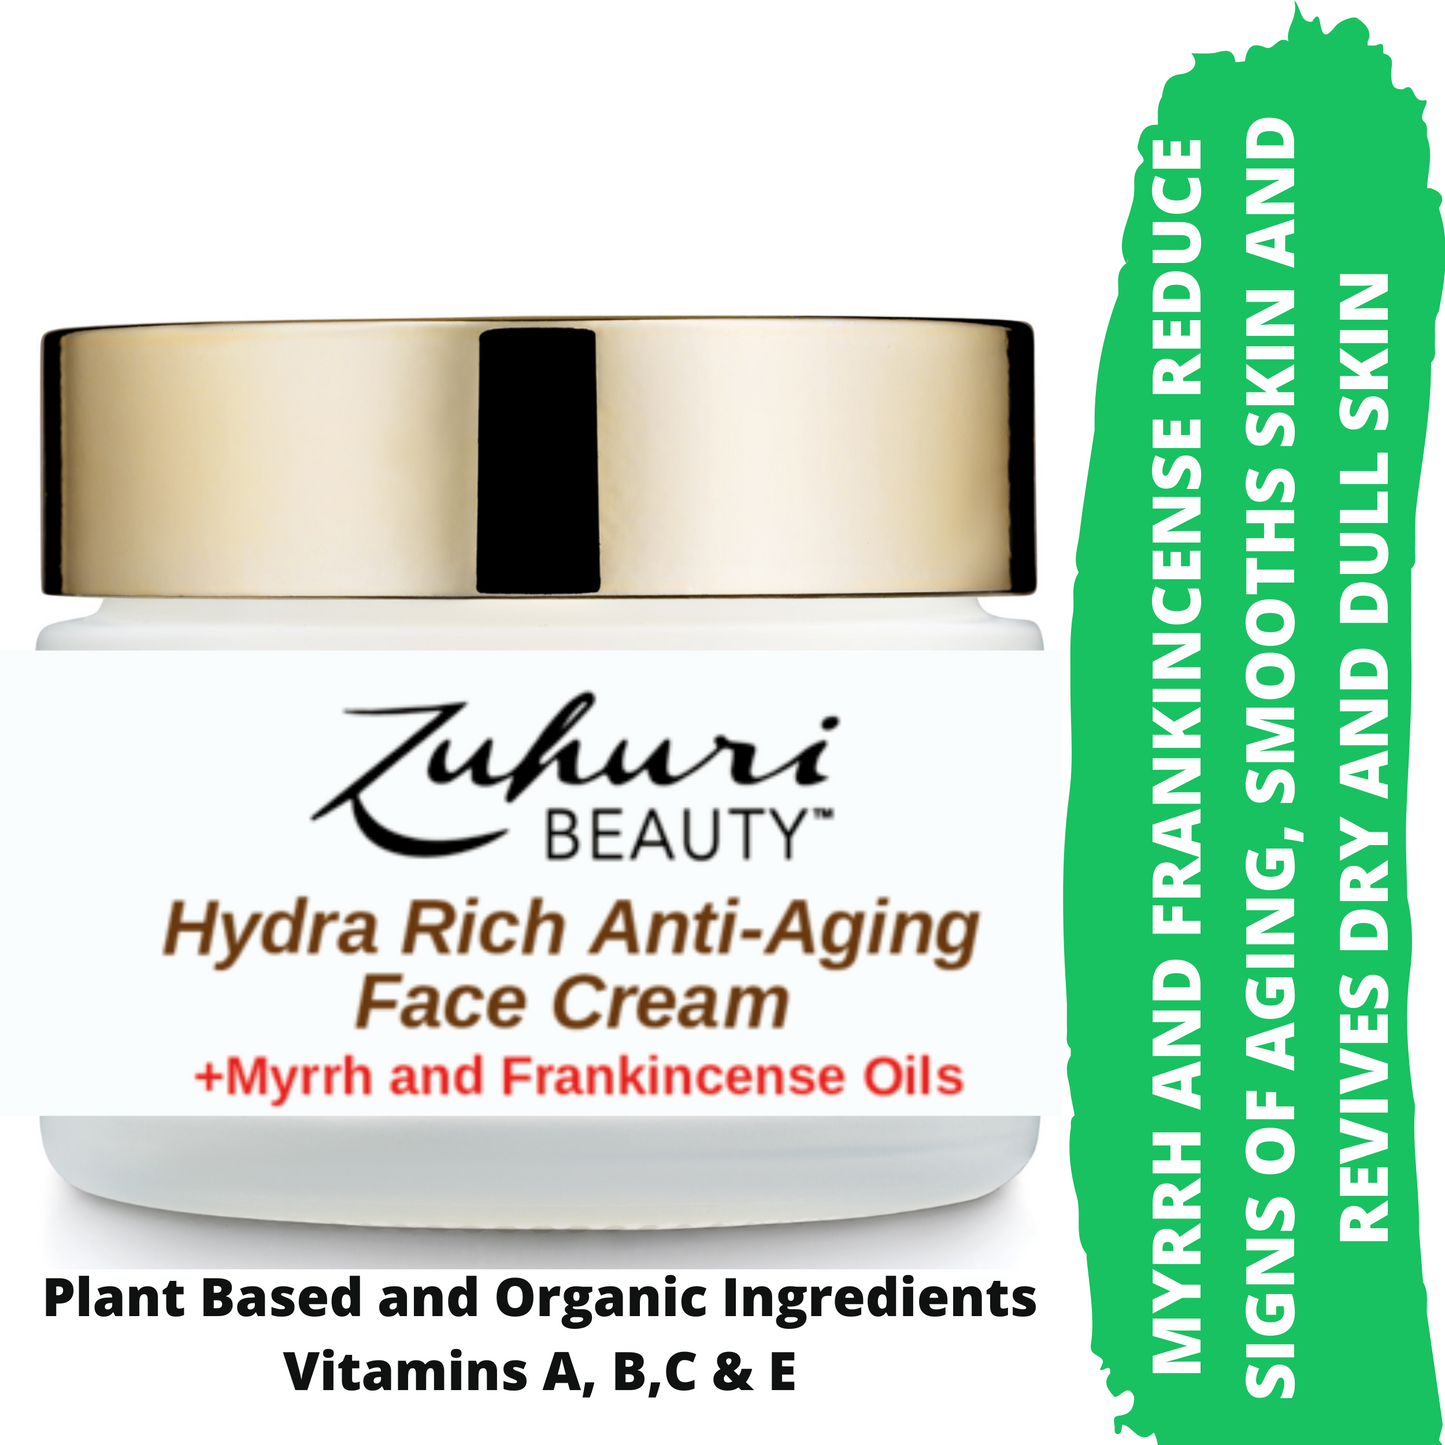 
                  
                    Zuhuri Beauty Hydra Rich Anti-Aging Face Cream with Squalane
                  
                